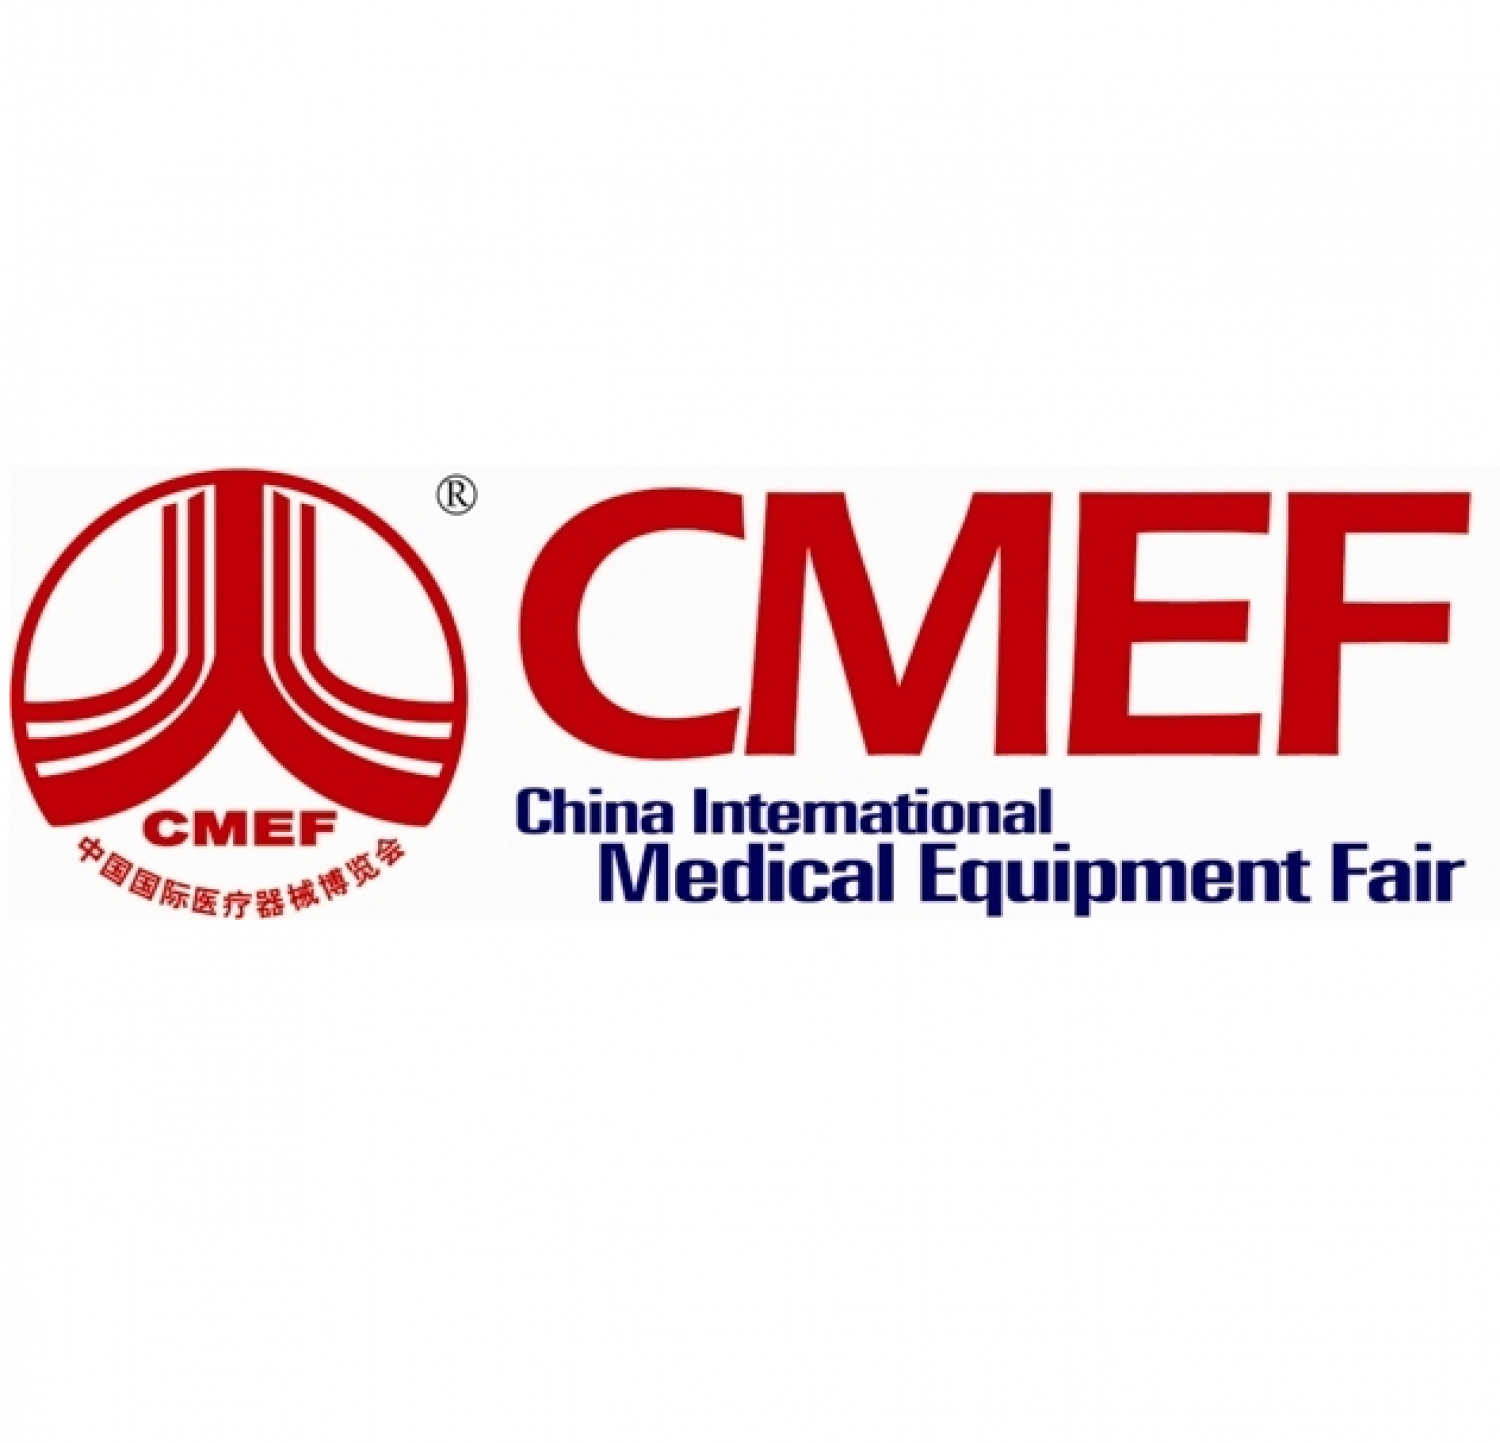 CMEF 15-18 Maggio 2015 Shanghai, China 